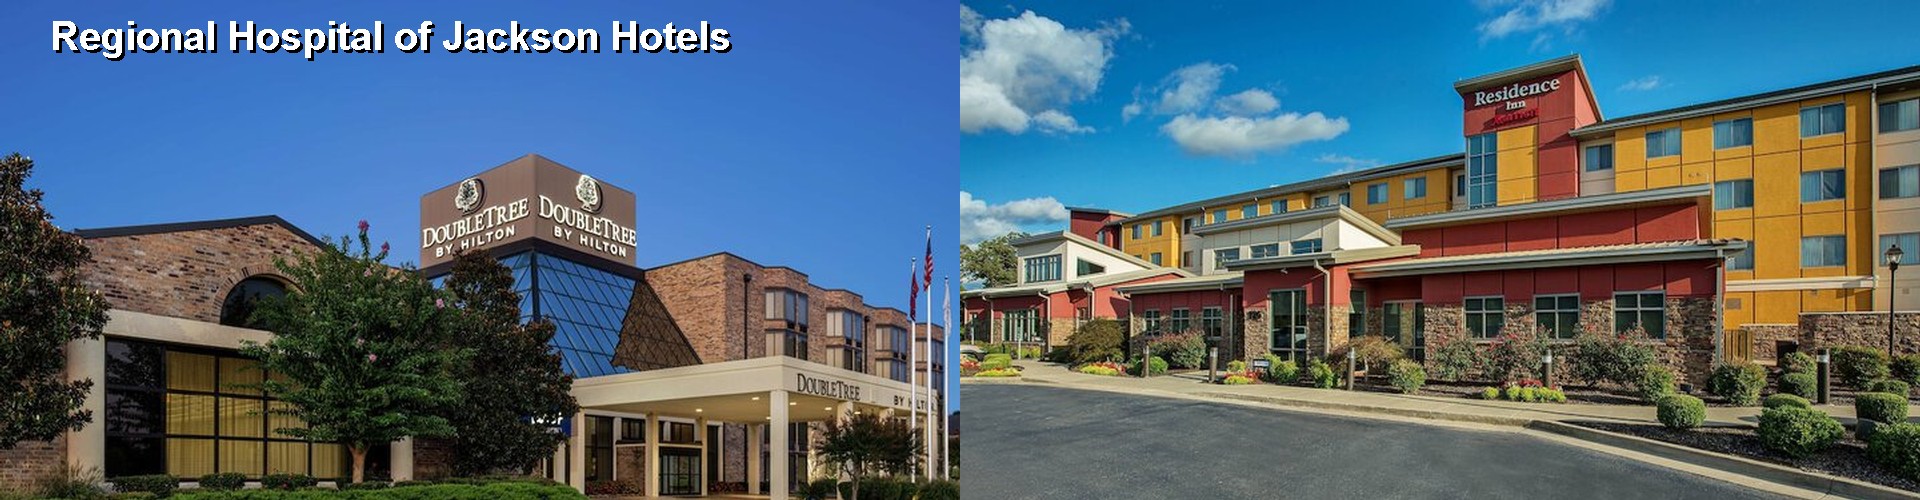 5 Best Hotels near Regional Hospital of Jackson